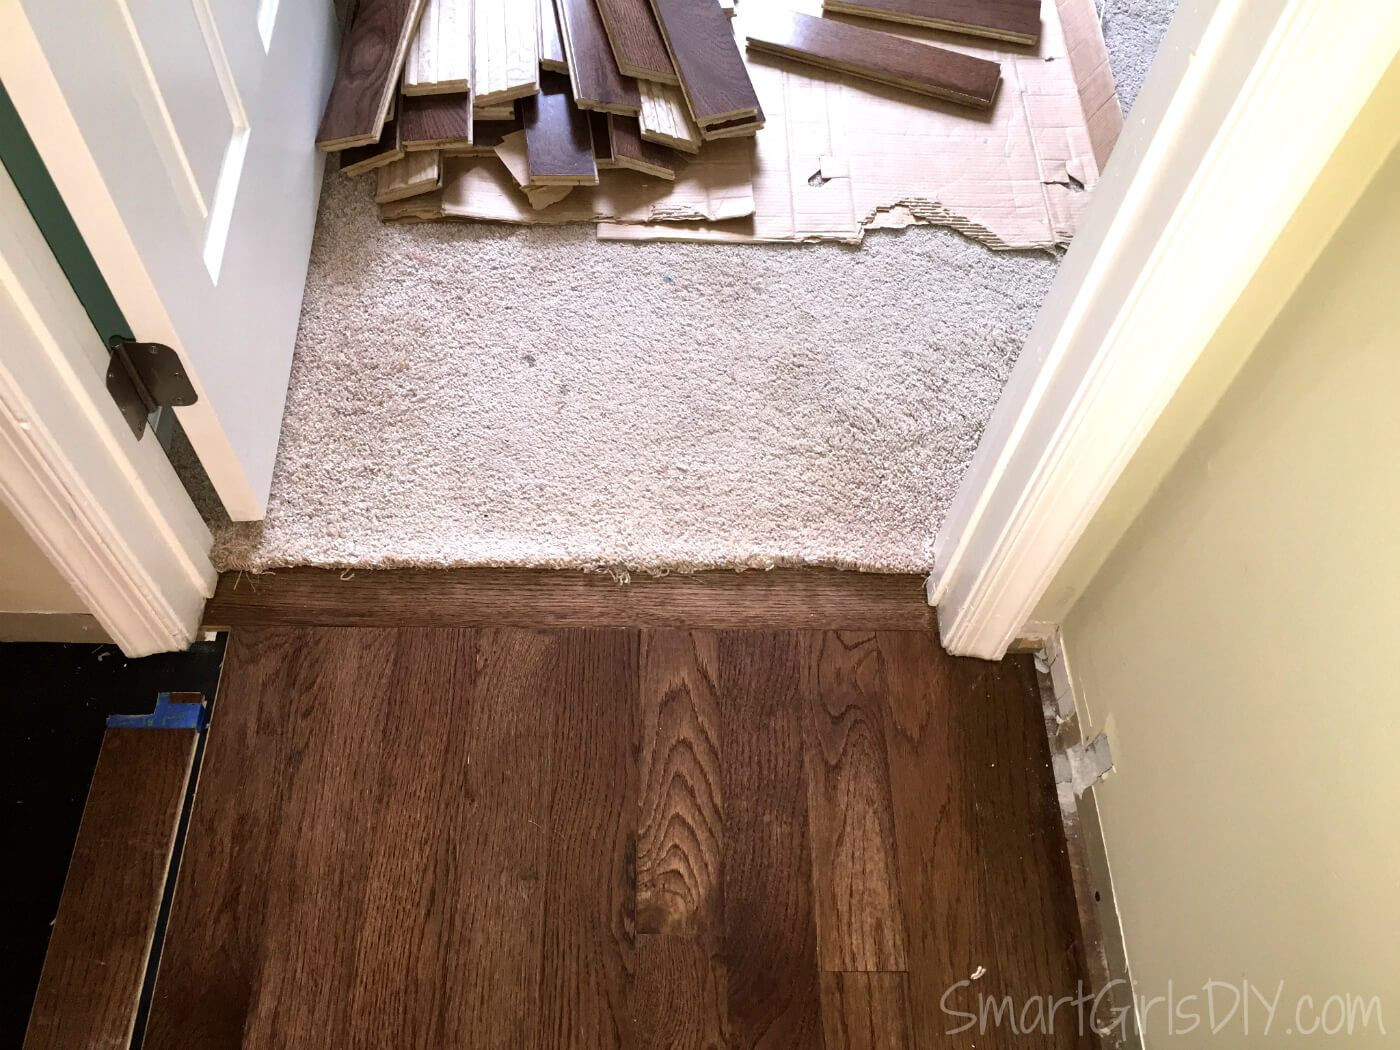 direction hardwood floors should be laid of upstairs hallway 1 installing hardwood floors with transition between carpet and hardwood floor